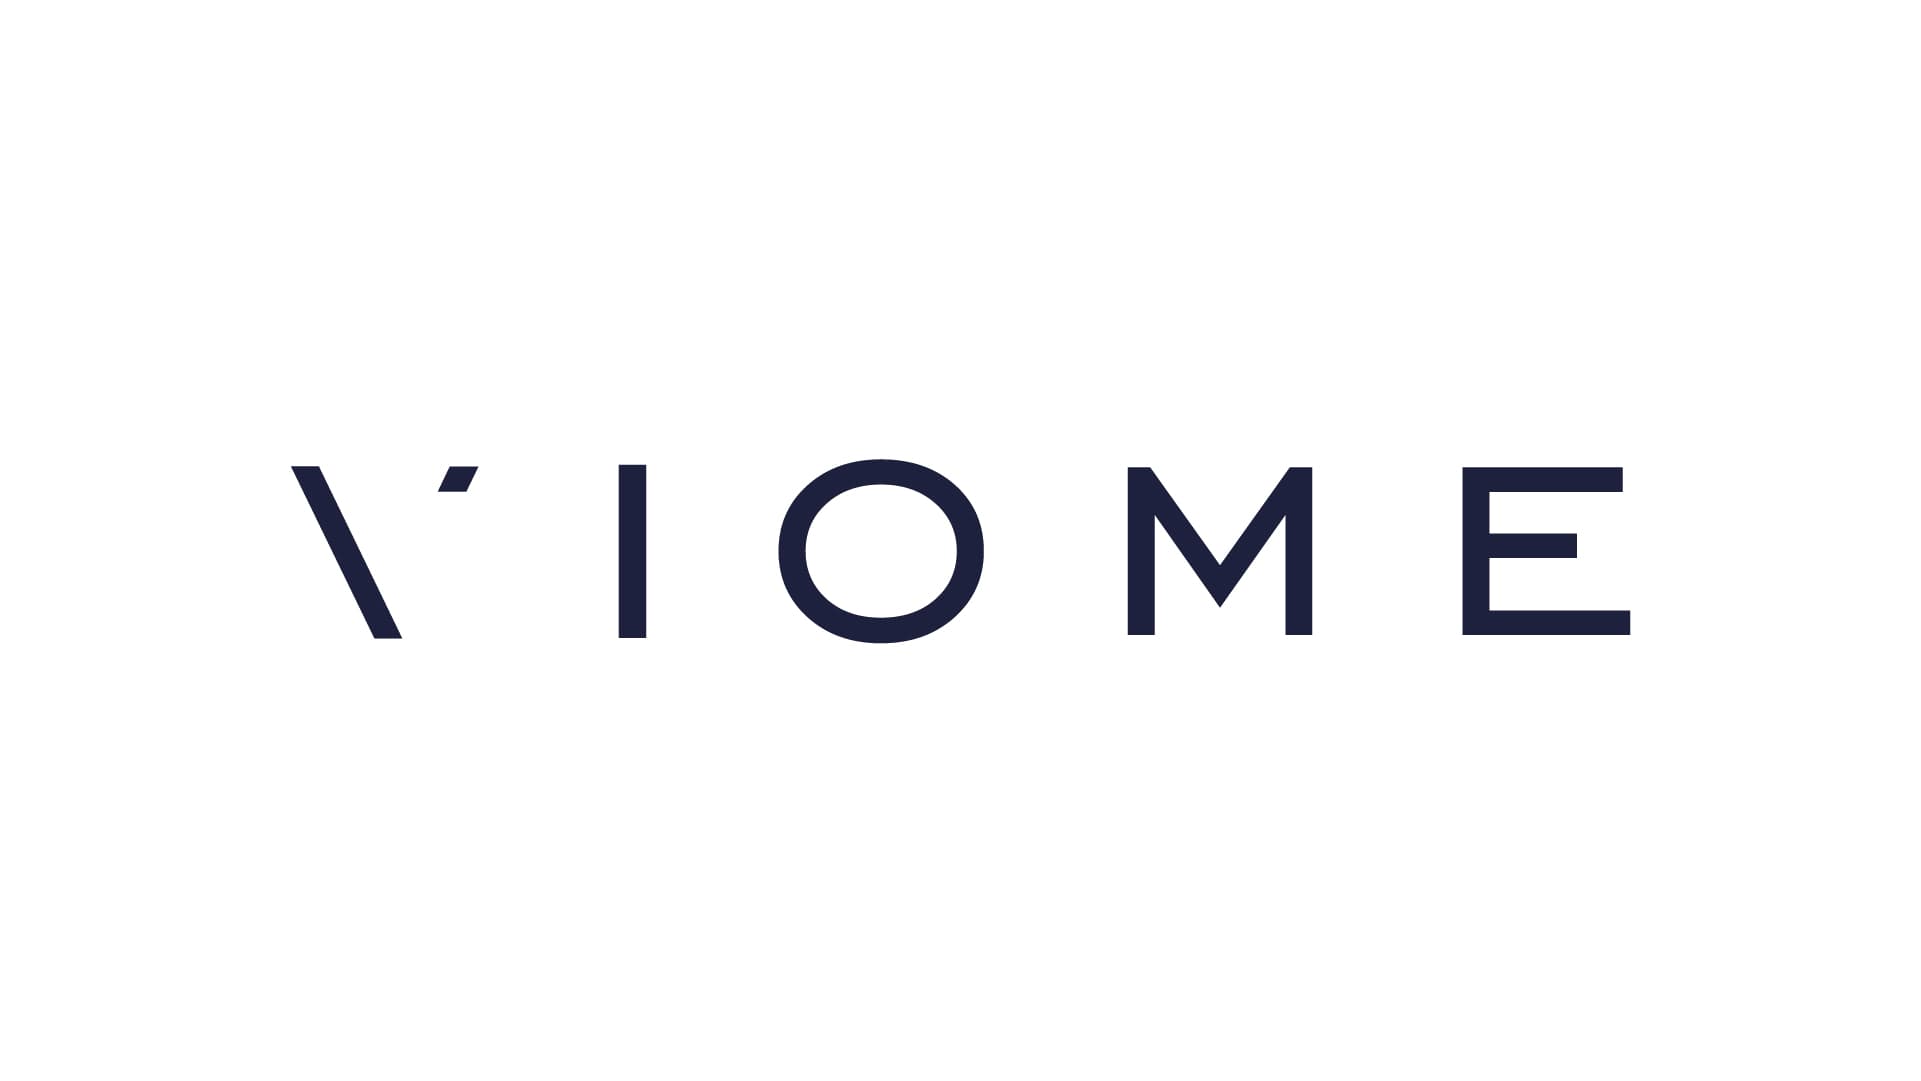 Viome、マイクロバイオームのスタートアップ、8,650万ドルを調達、CVSと流通契約を締結